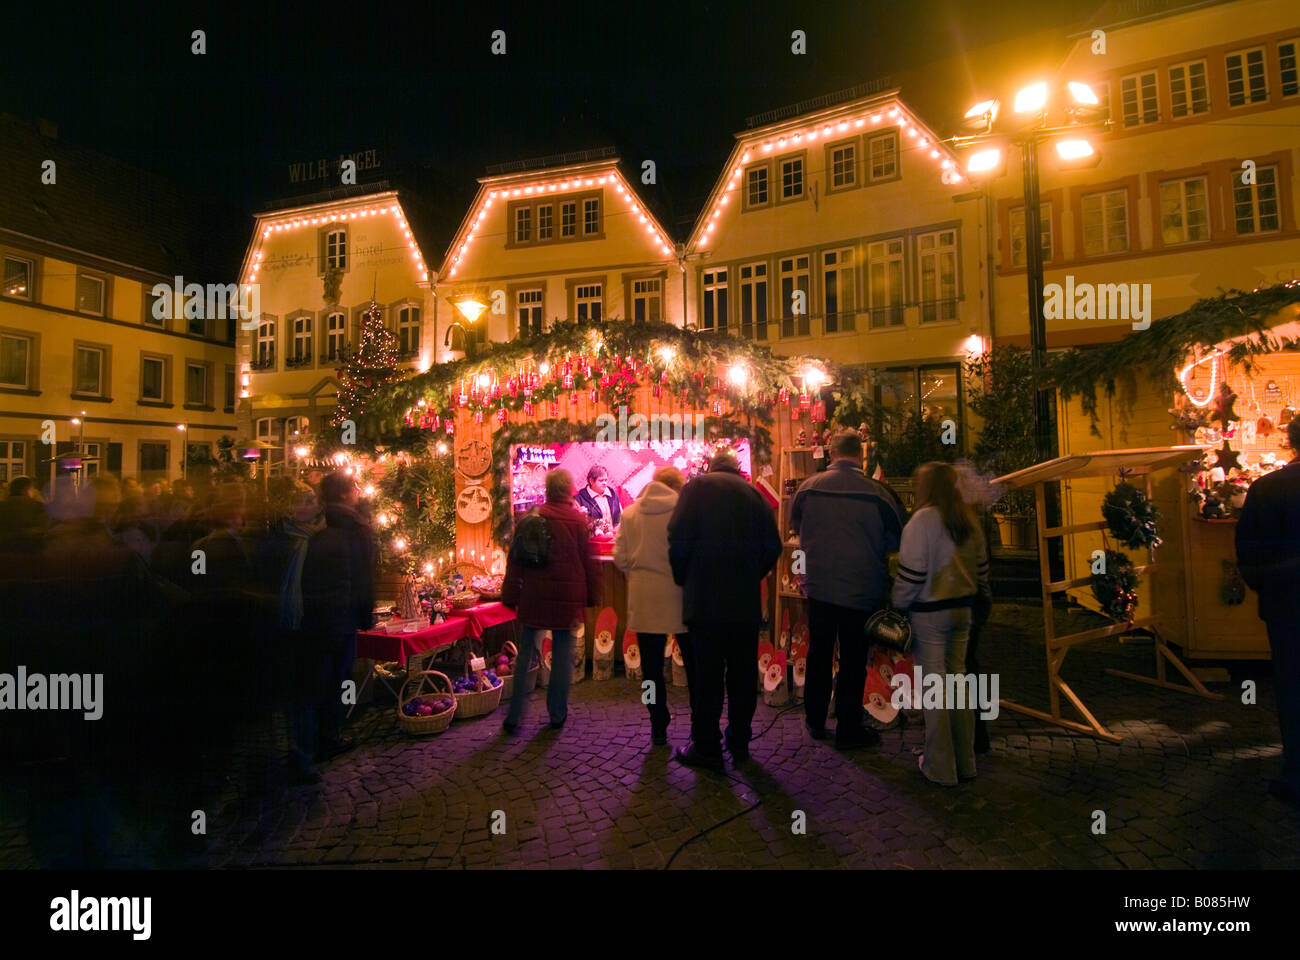 Mercato di Natale, St. Wendel, Germania. Foto Stock